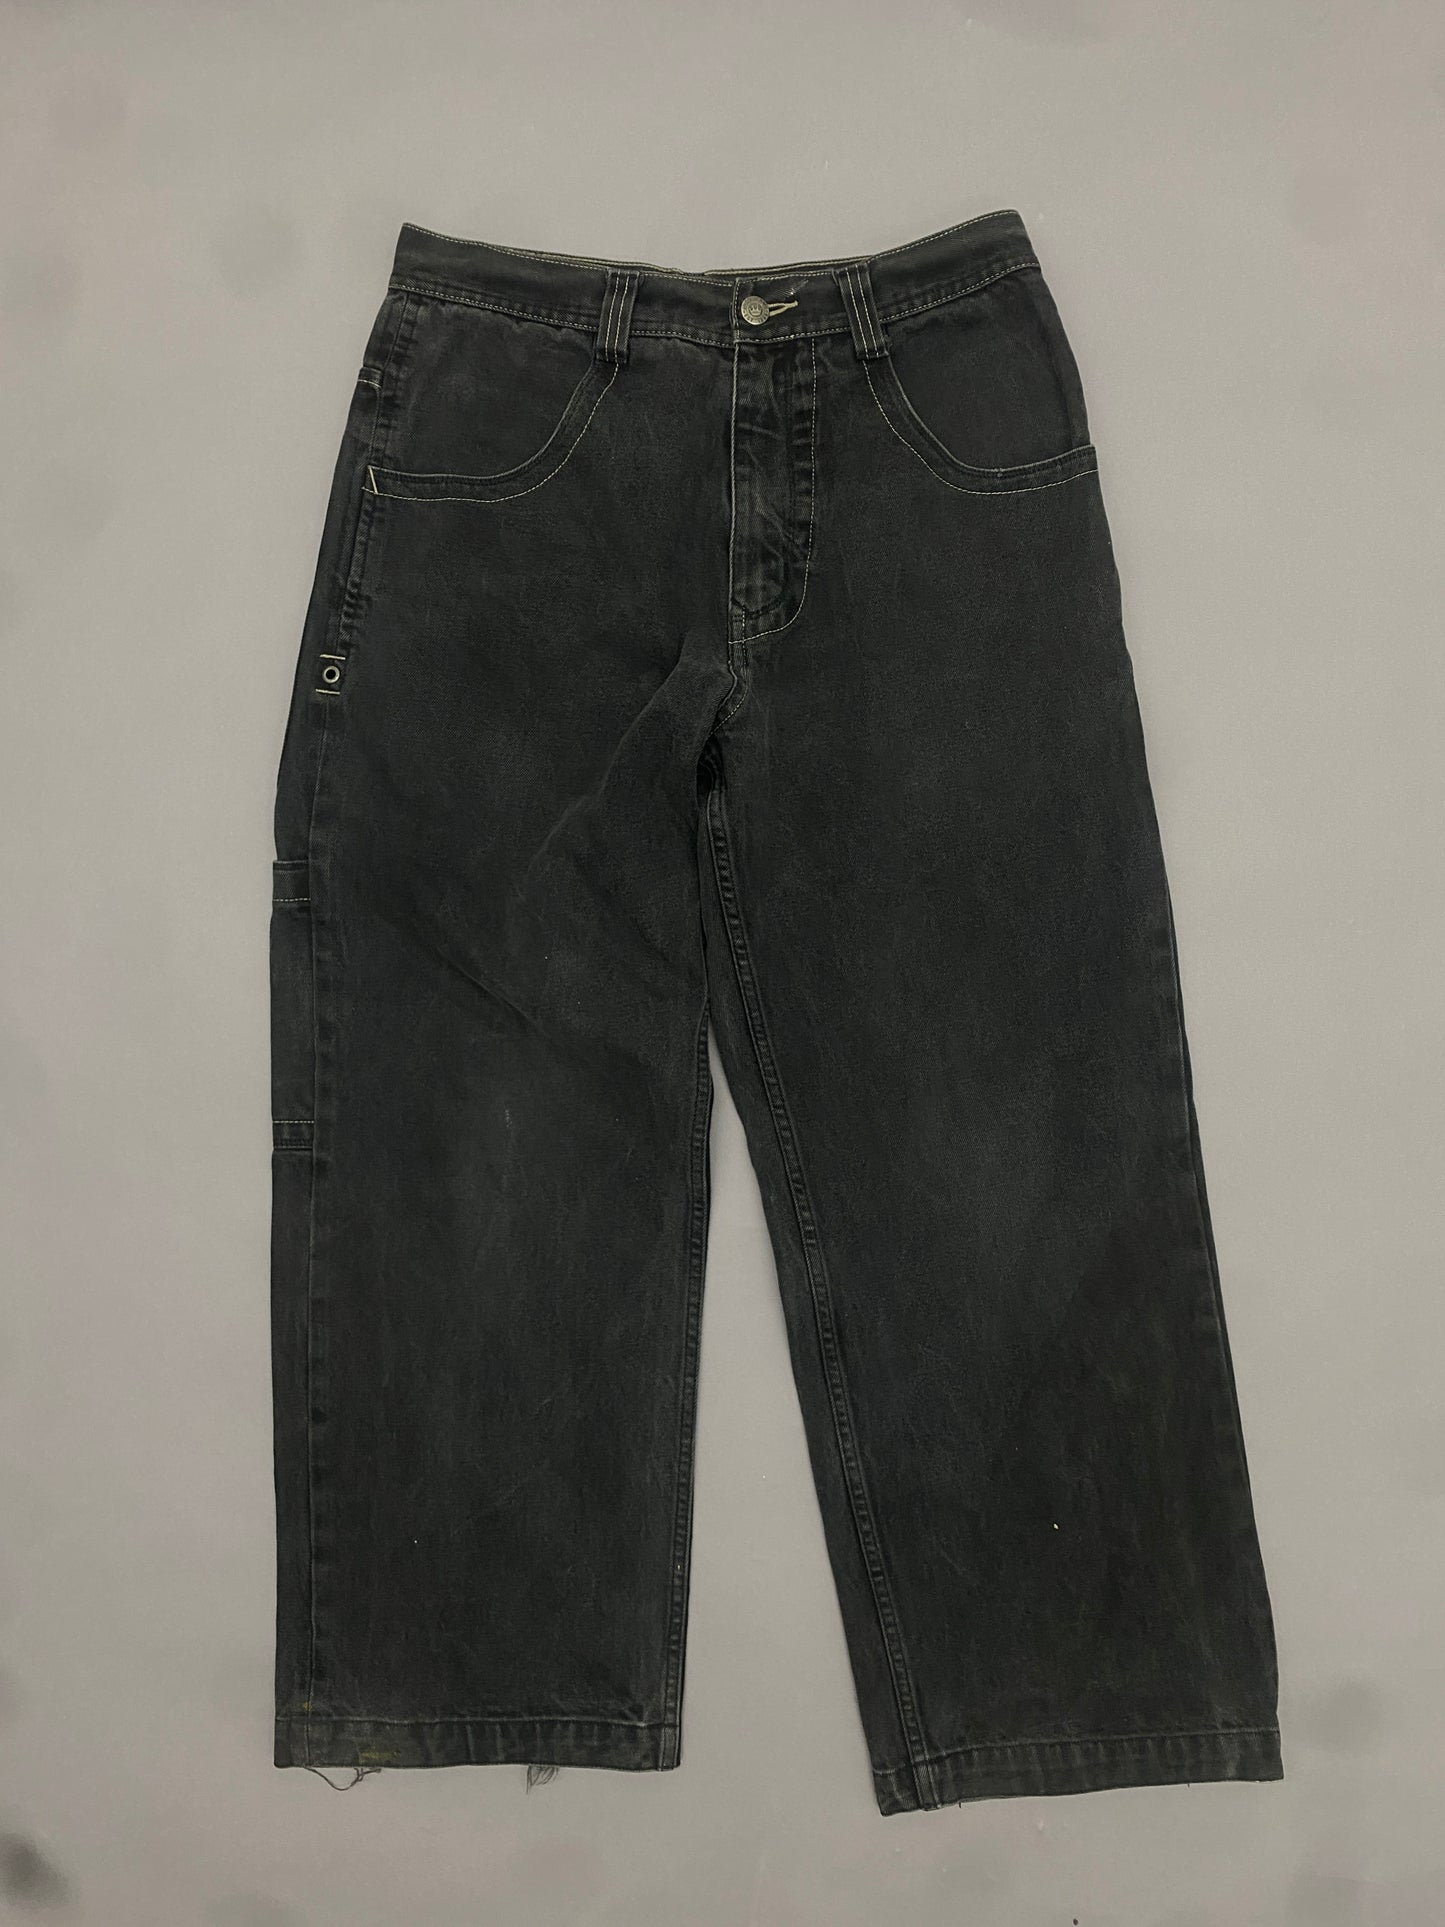 JNCO Flame Skull Vintage Jeans - 33 x 30